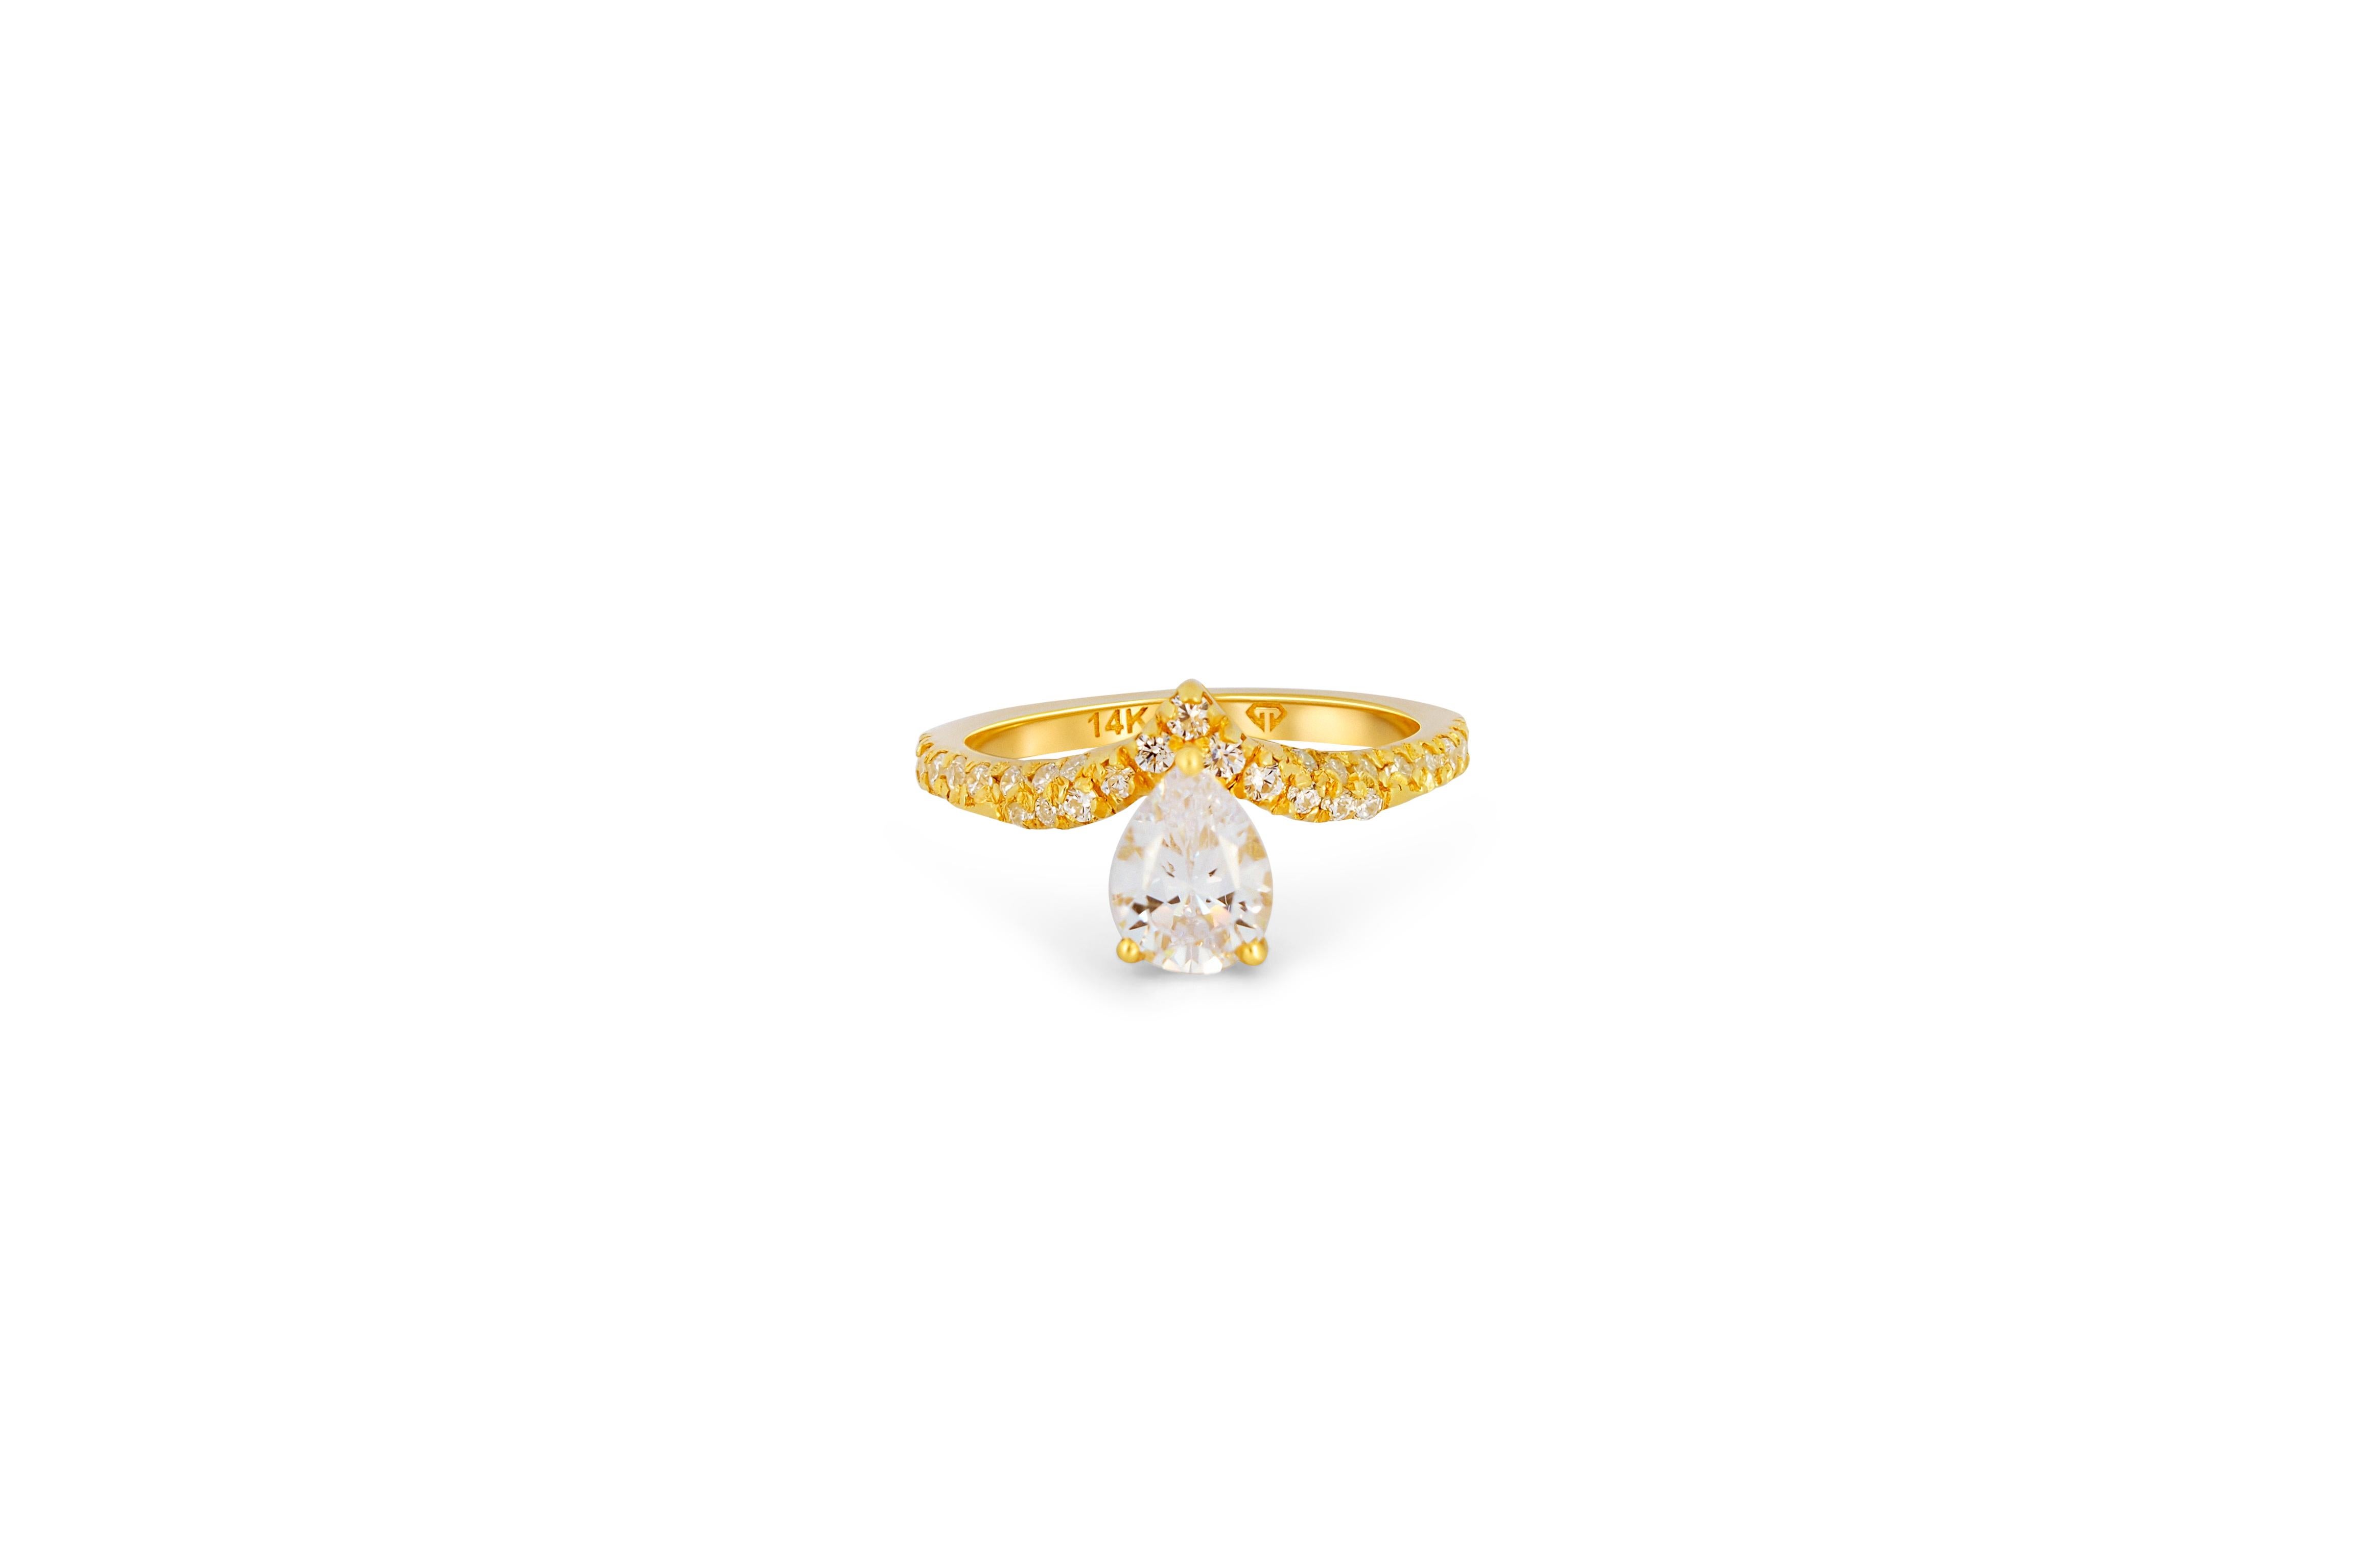 For Sale:  1 ct Pear moissanite 14k gold ring.  4